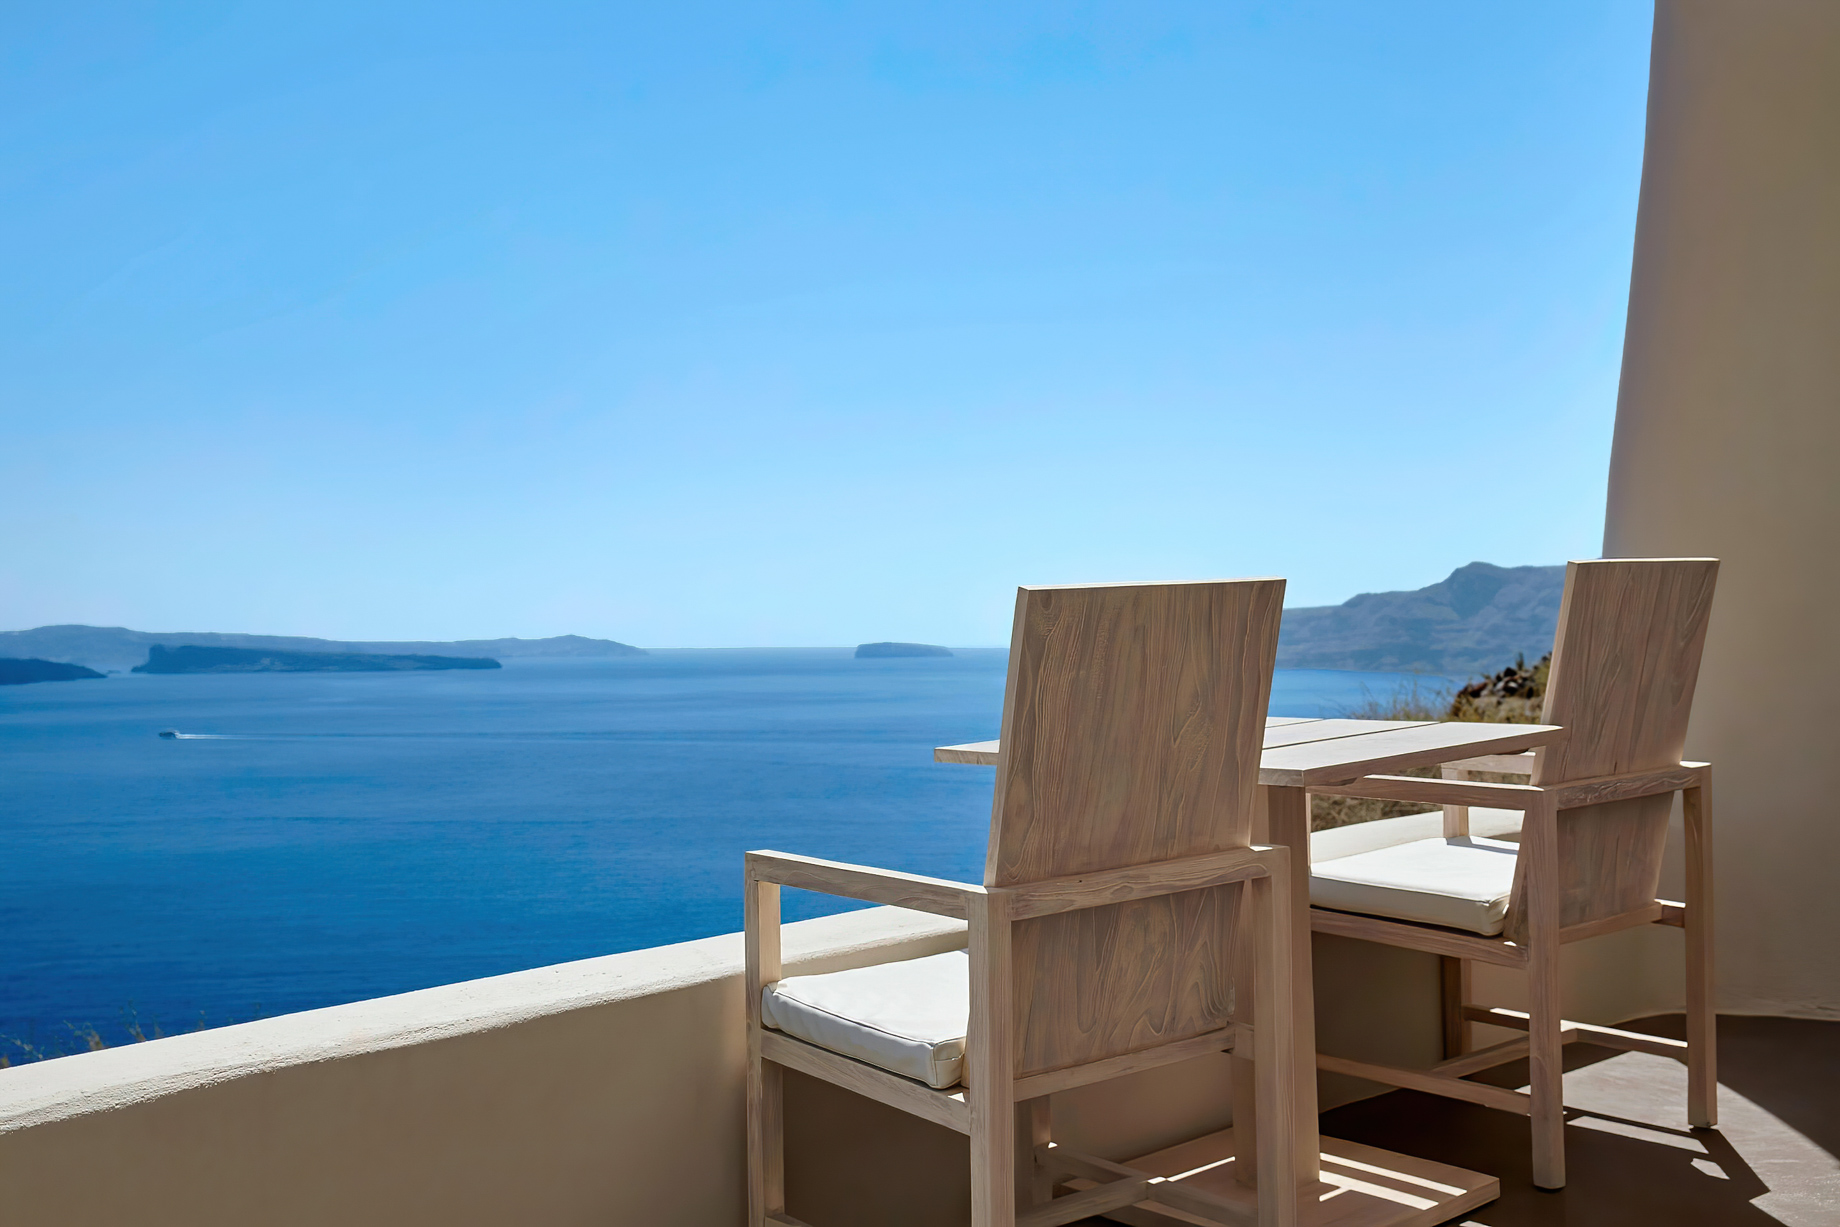 Mystique Hotel Santorini – Oia, Santorini Island, Greece – Private Terrace View